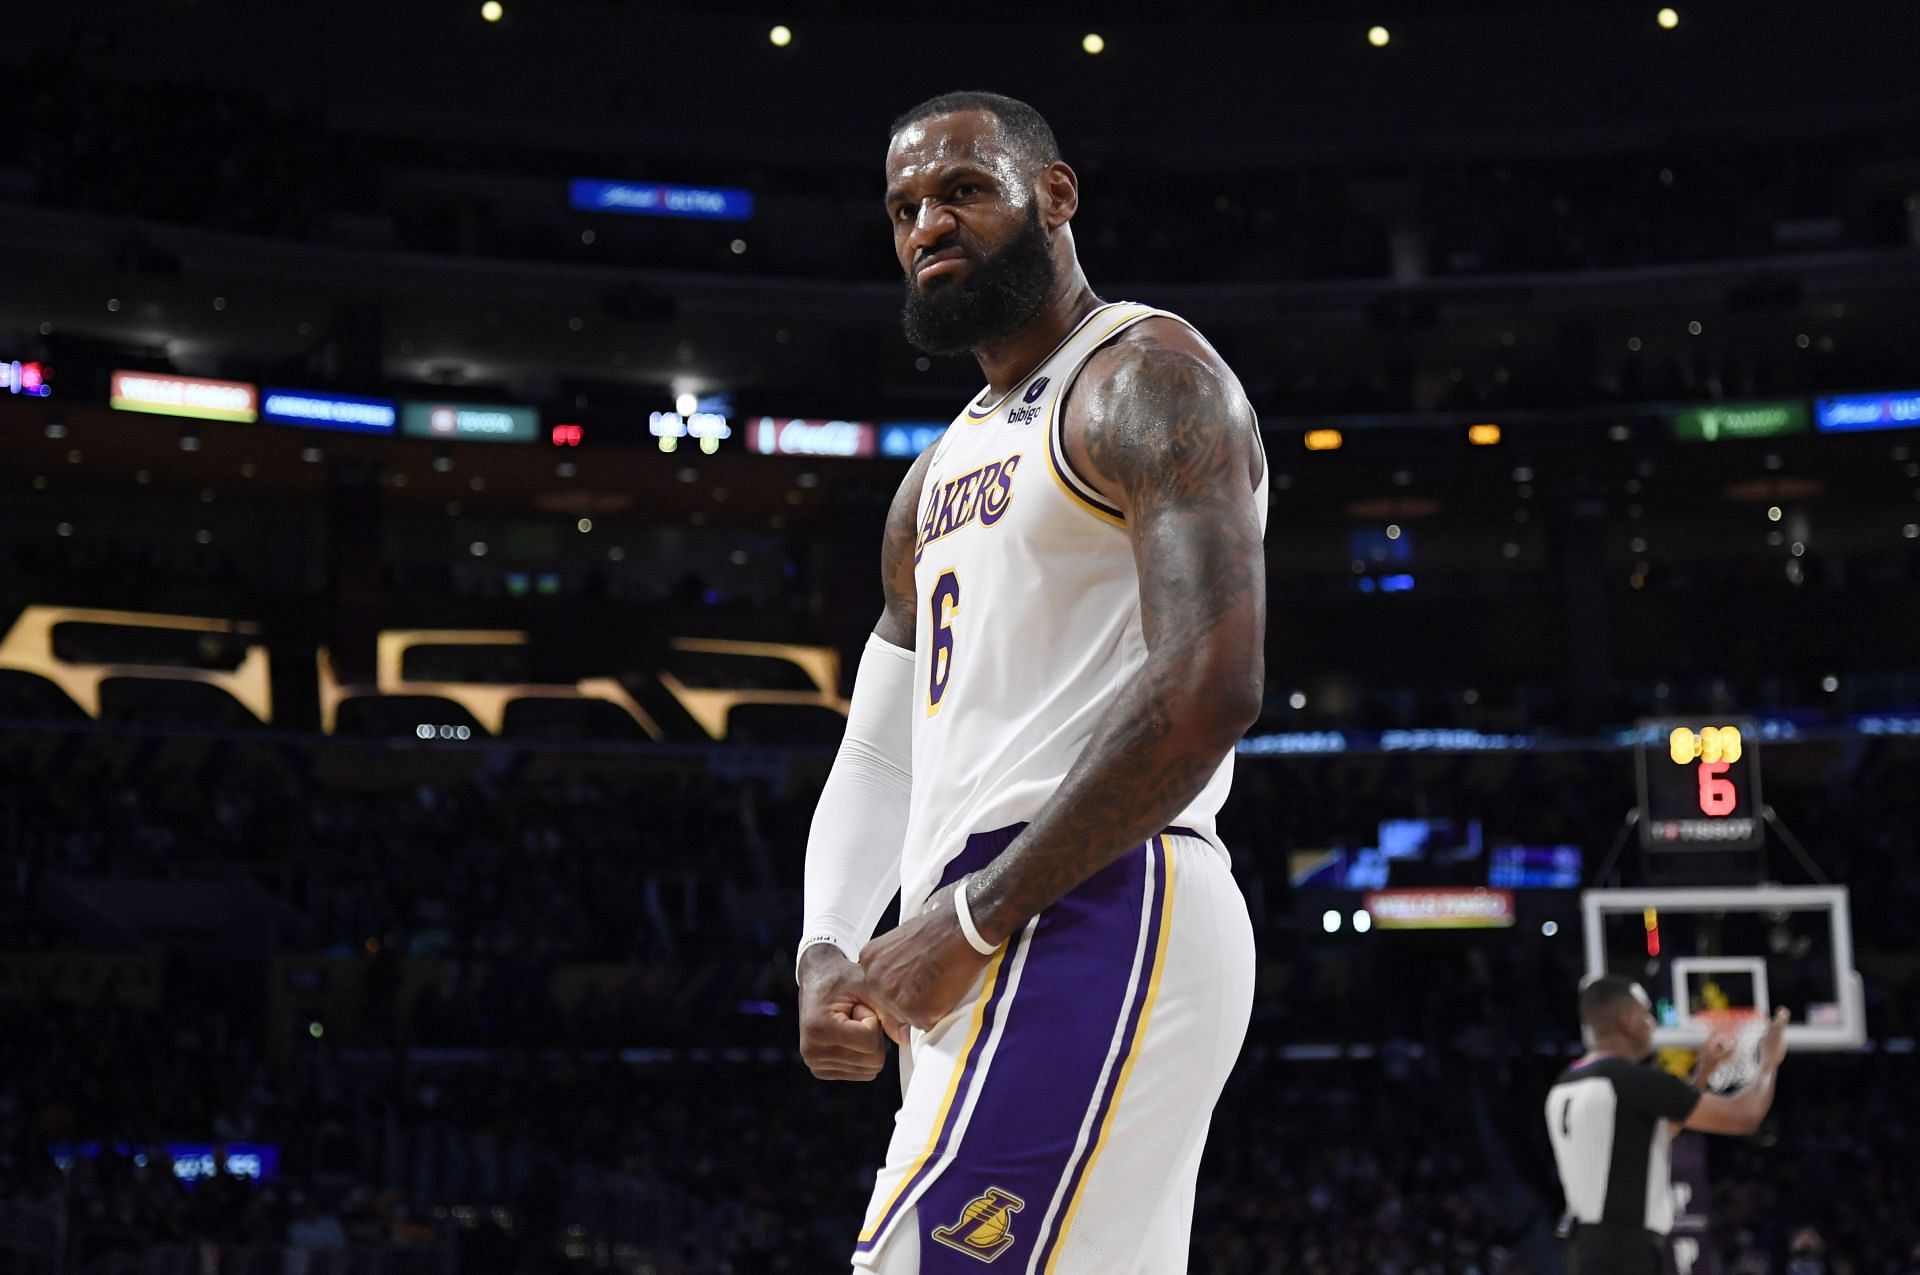 LeBron James reacts to a play at the Orlando Magic vs LA Lakers game